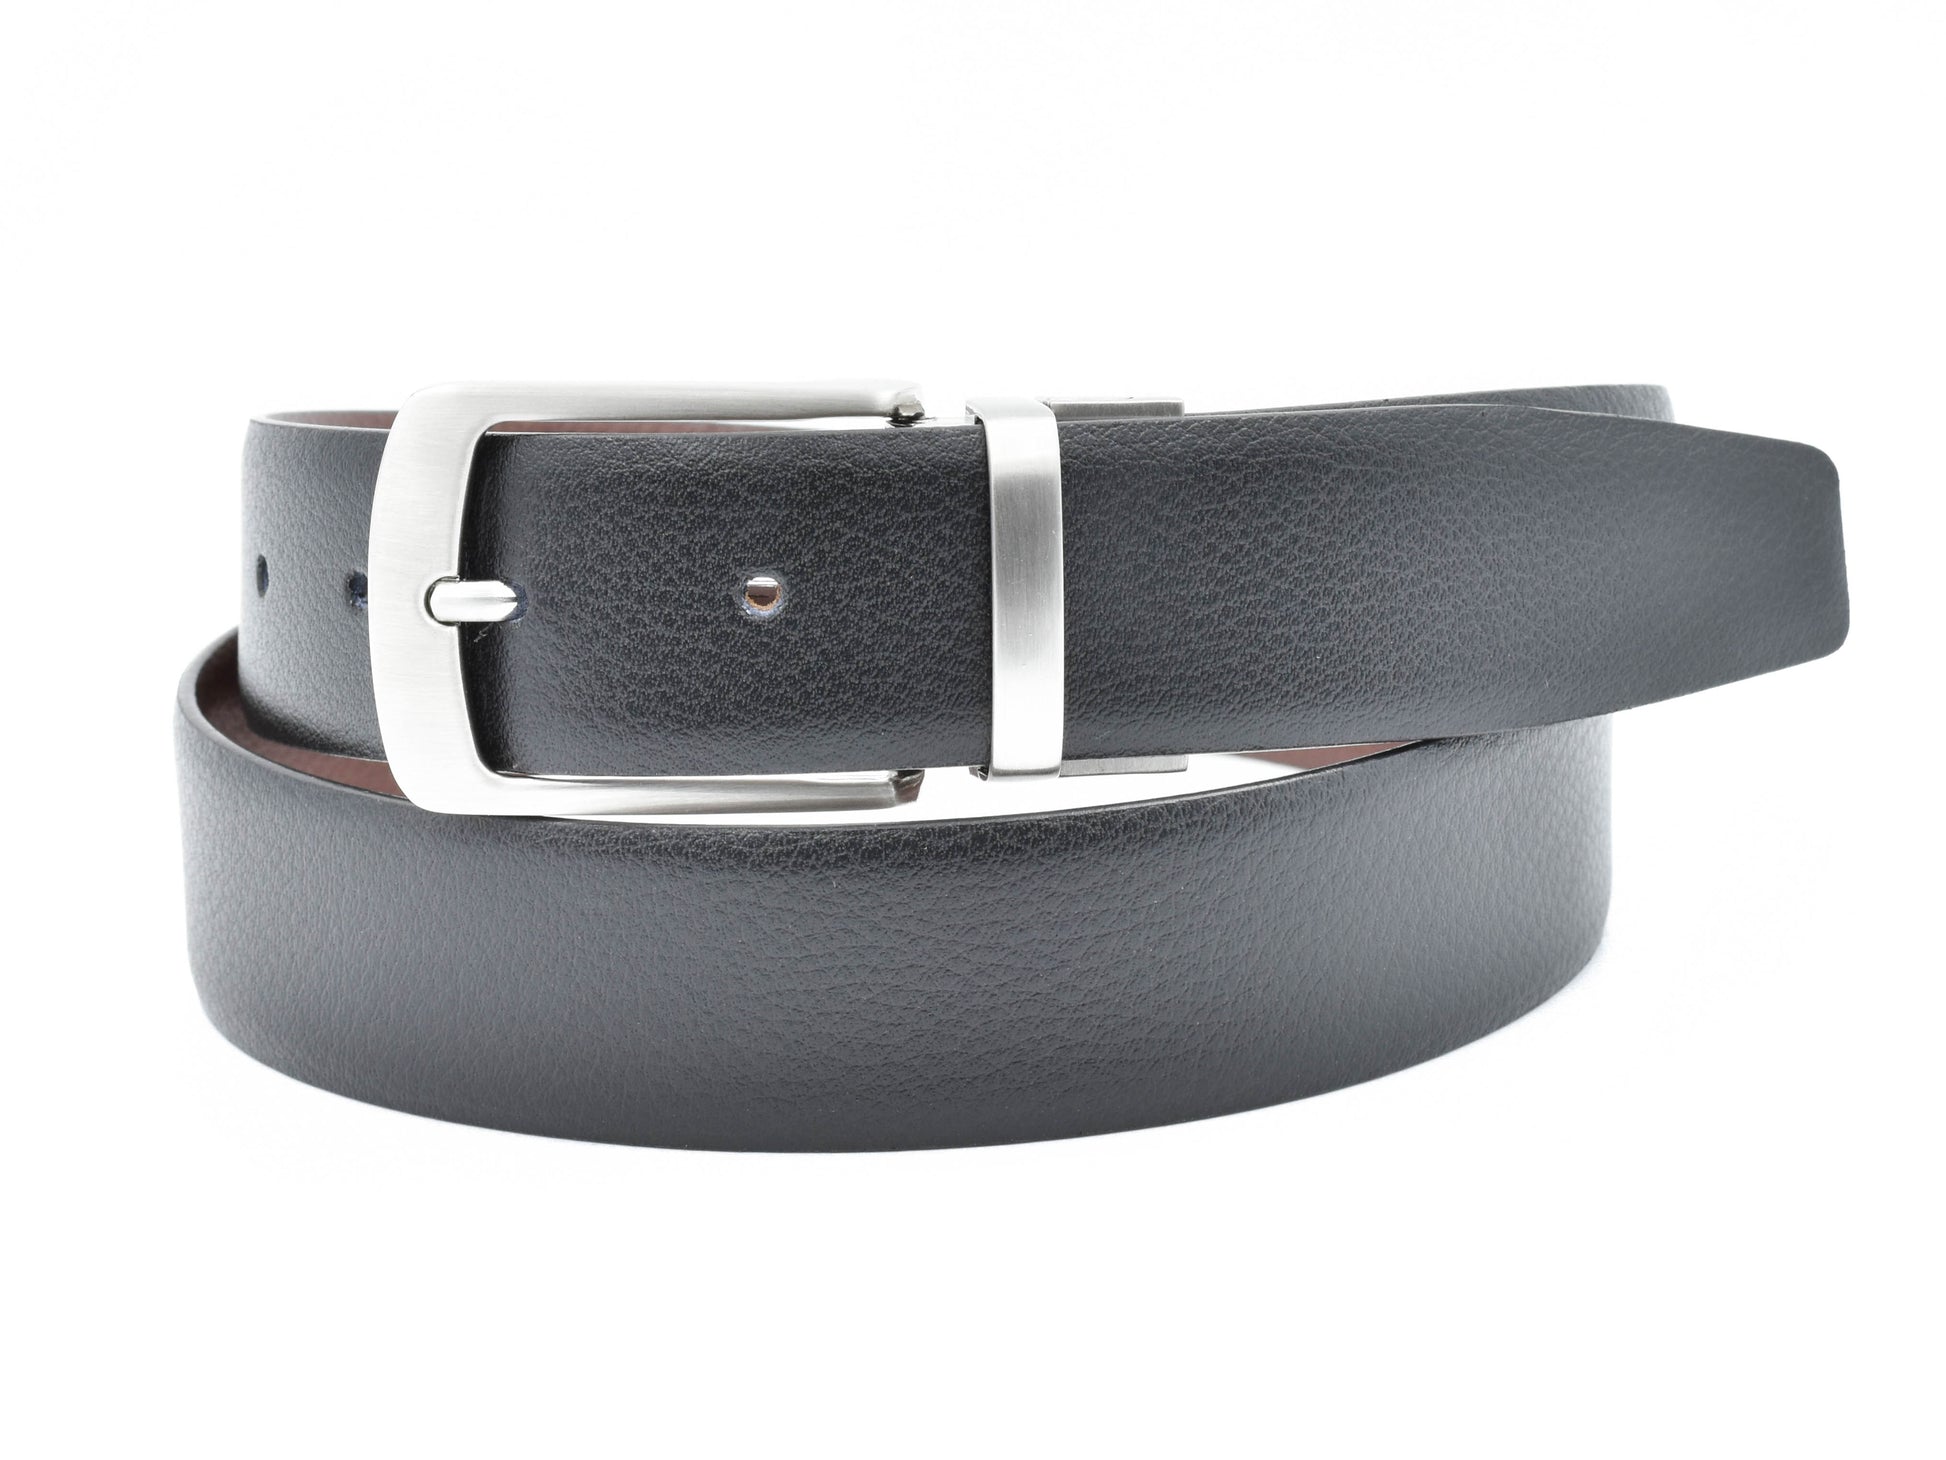 Buy Reversible Leather Belt for men at Low Price online – POLARIS